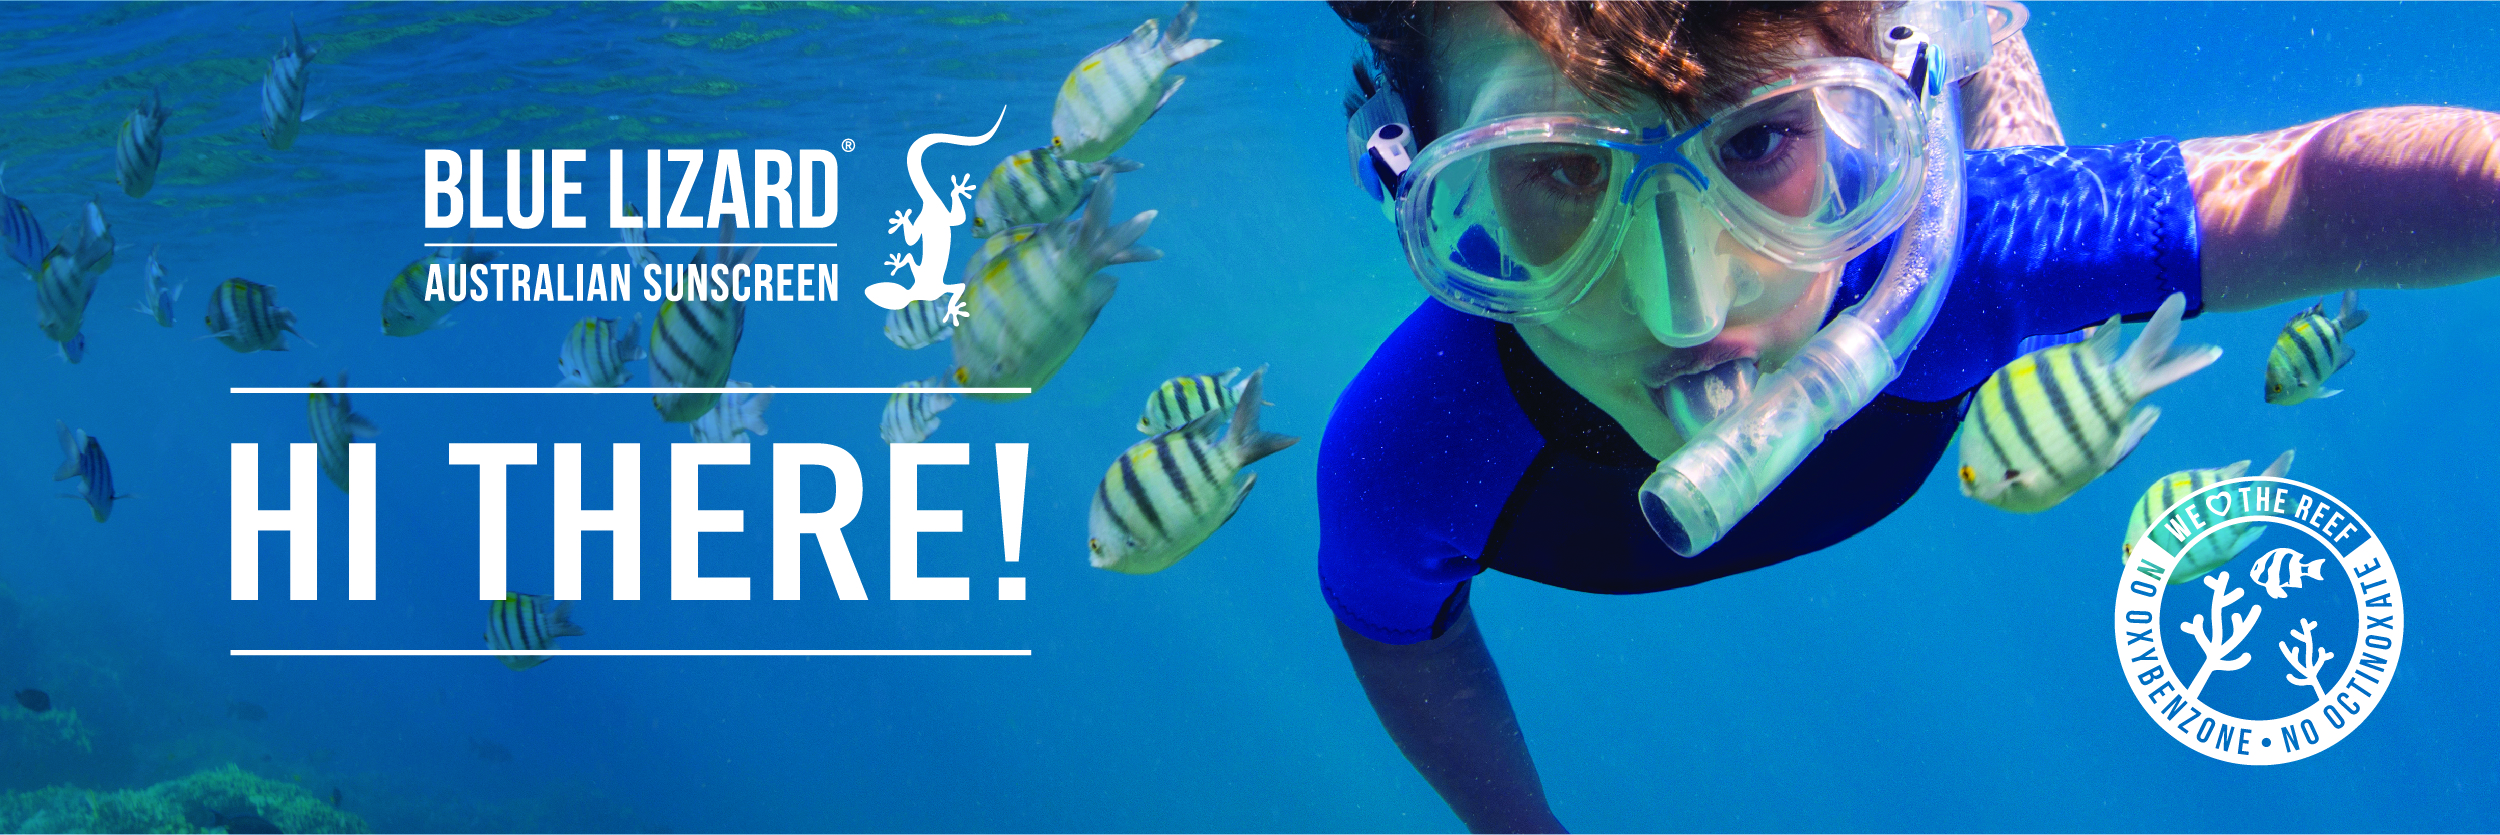 Hi there! - Blue Lizard Australian Sunscreen - We Love the Reef!